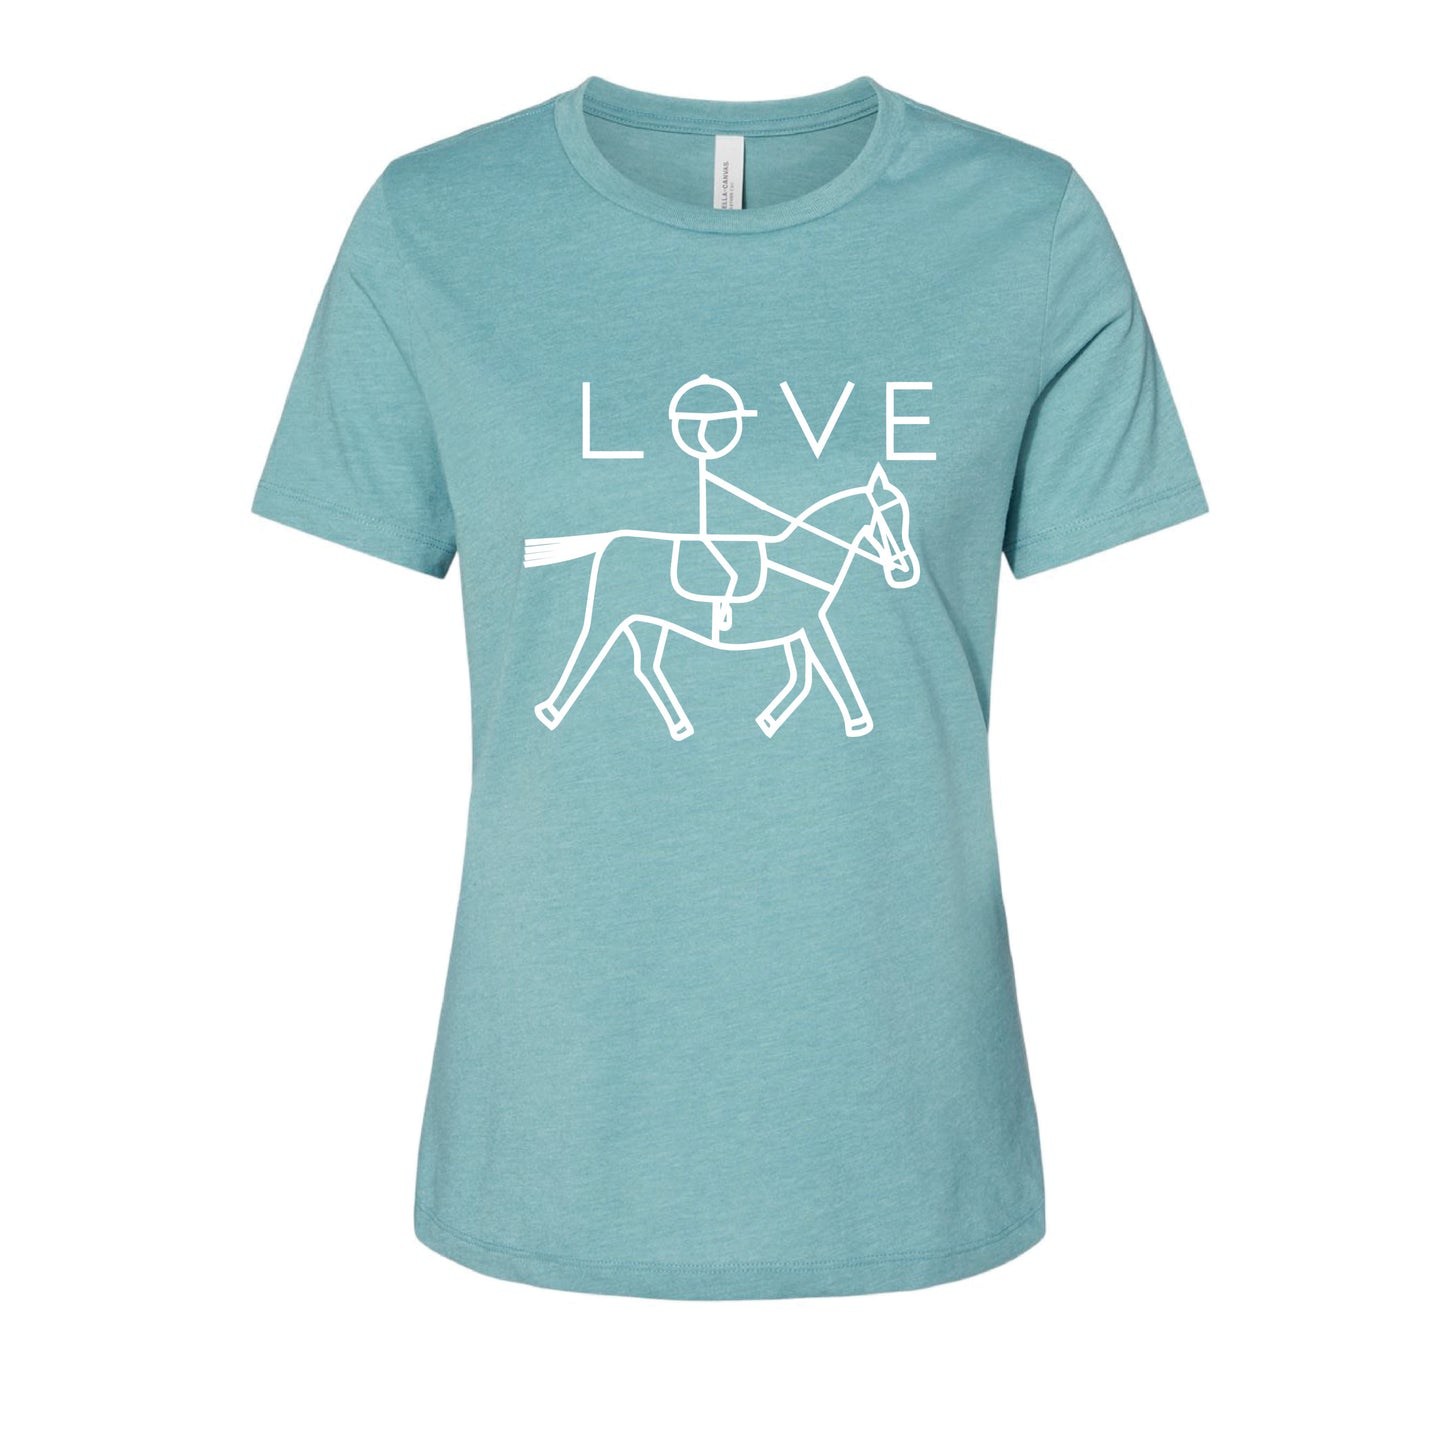 Equestrian Women's T-shirt